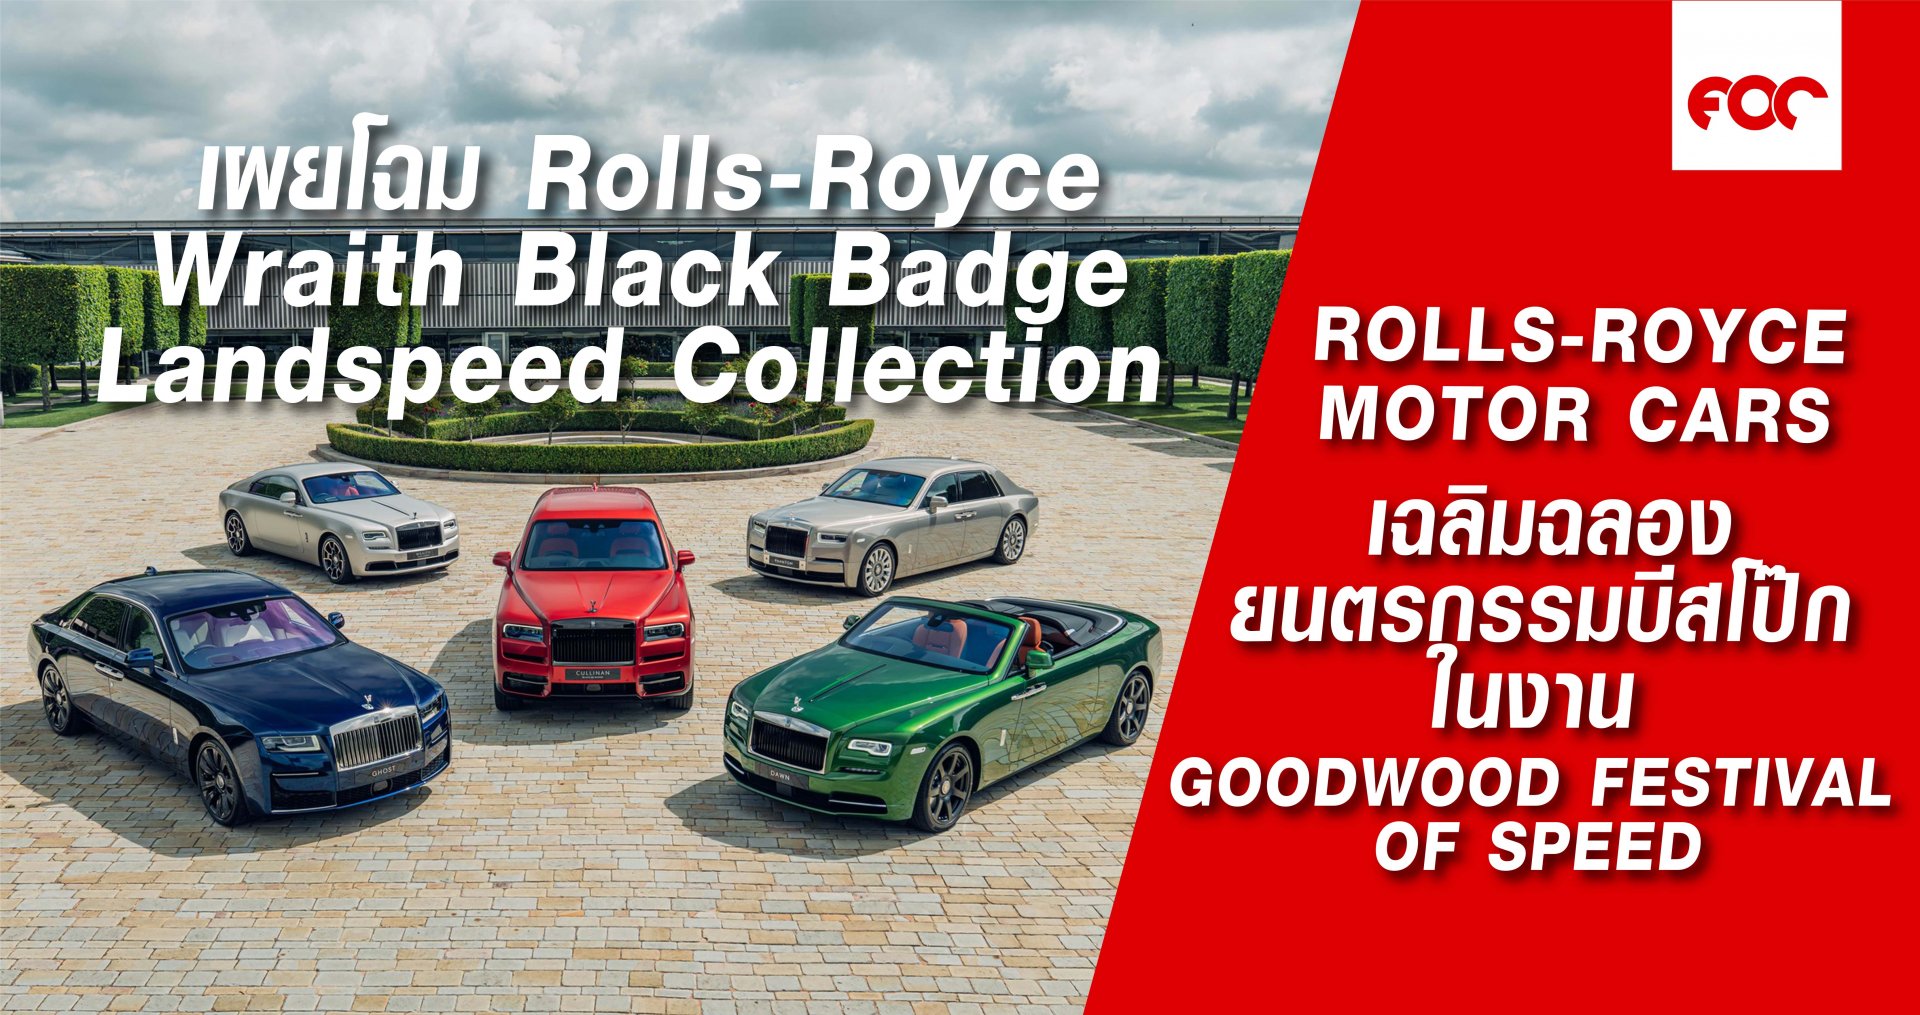 ROLLS-ROYCE MOTOR CARS เผยโฉมของ Rolls-Royce Wraith Black Badge Landspeed Collection สู่สาธารณชนครั้งแรกของโลก 